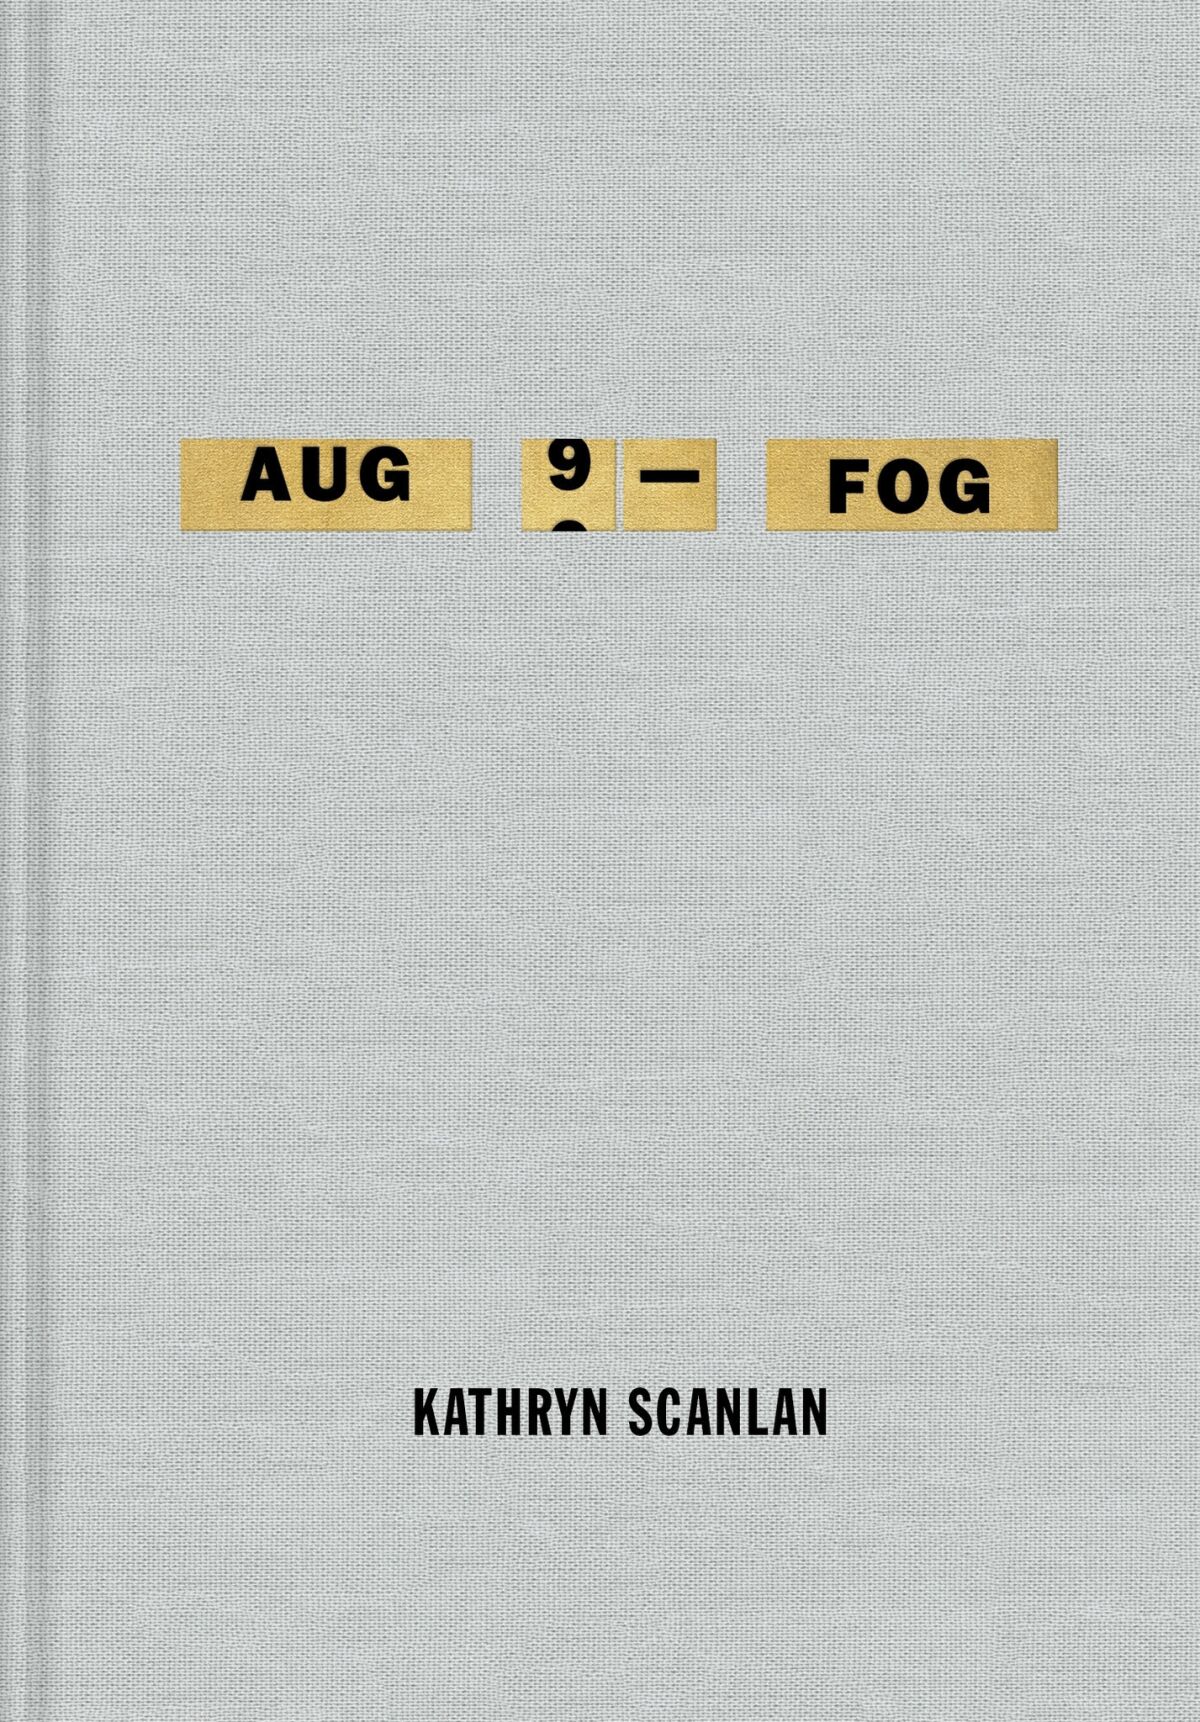 A book jacket of Kathryn Scanlan's "Aug 9 - Fog."